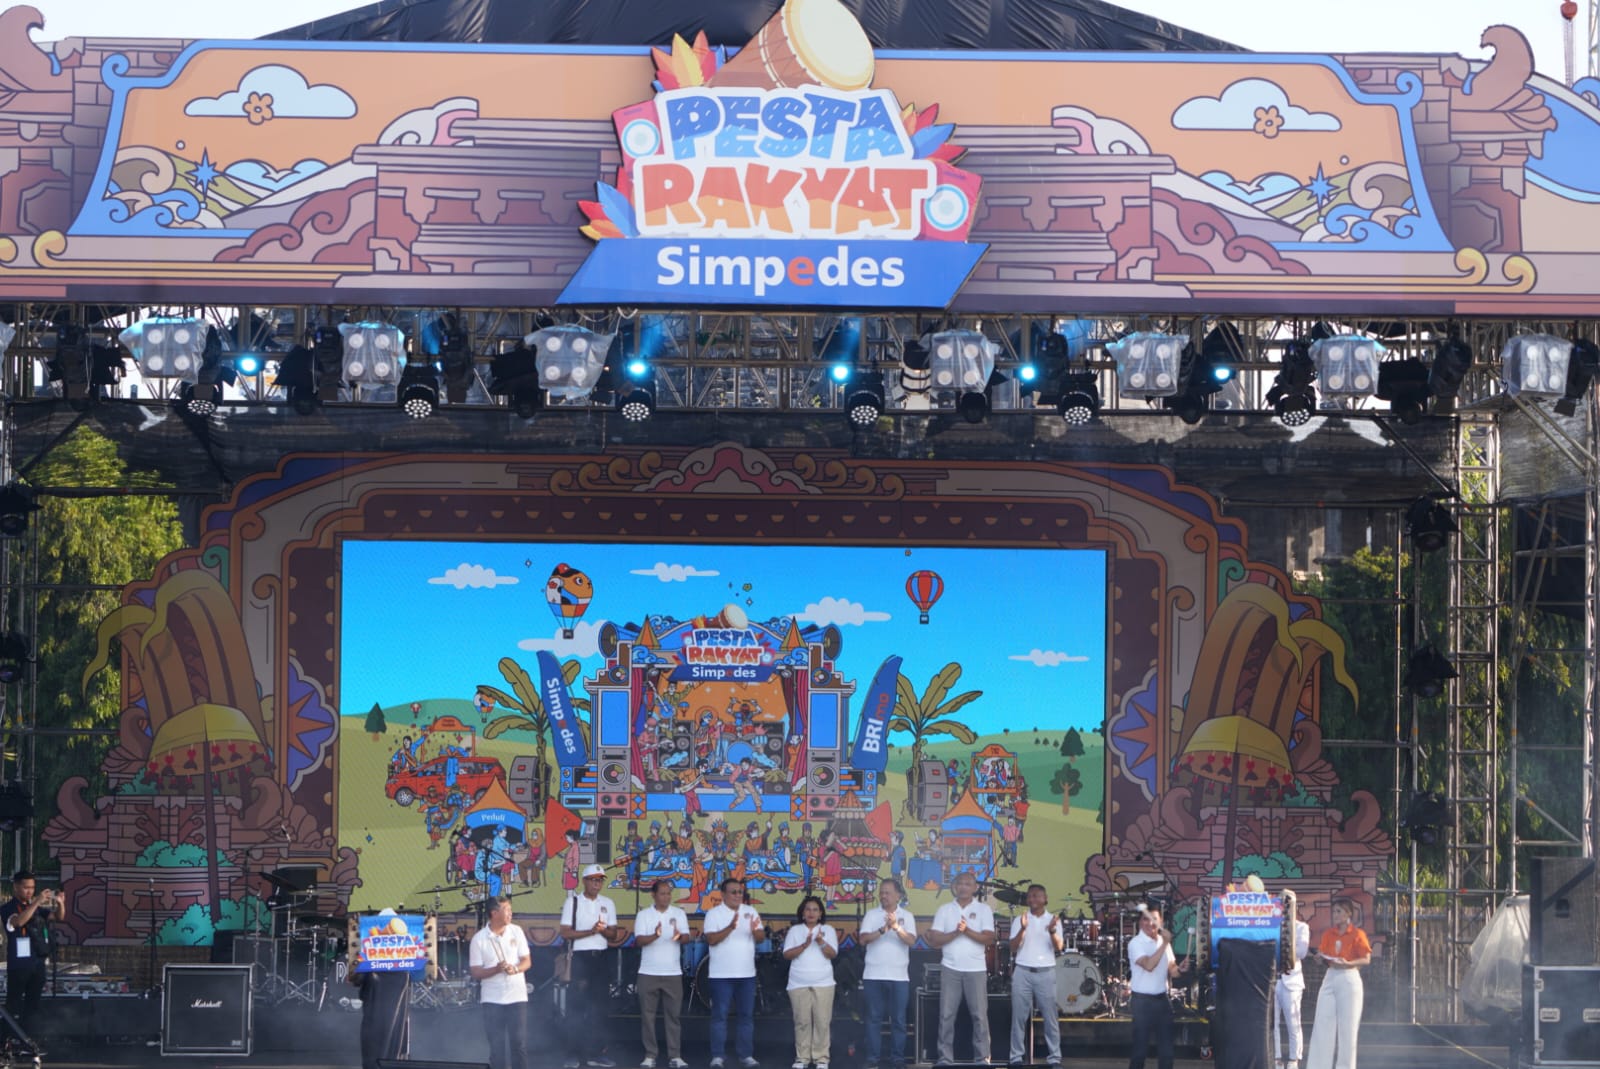 Wujudkan Kepedulian Ekonomi, BRI Libatkan 100 UMKM Binaan dan Hiburan Band dalam Pesta Rakyat Simpedes Denpasar